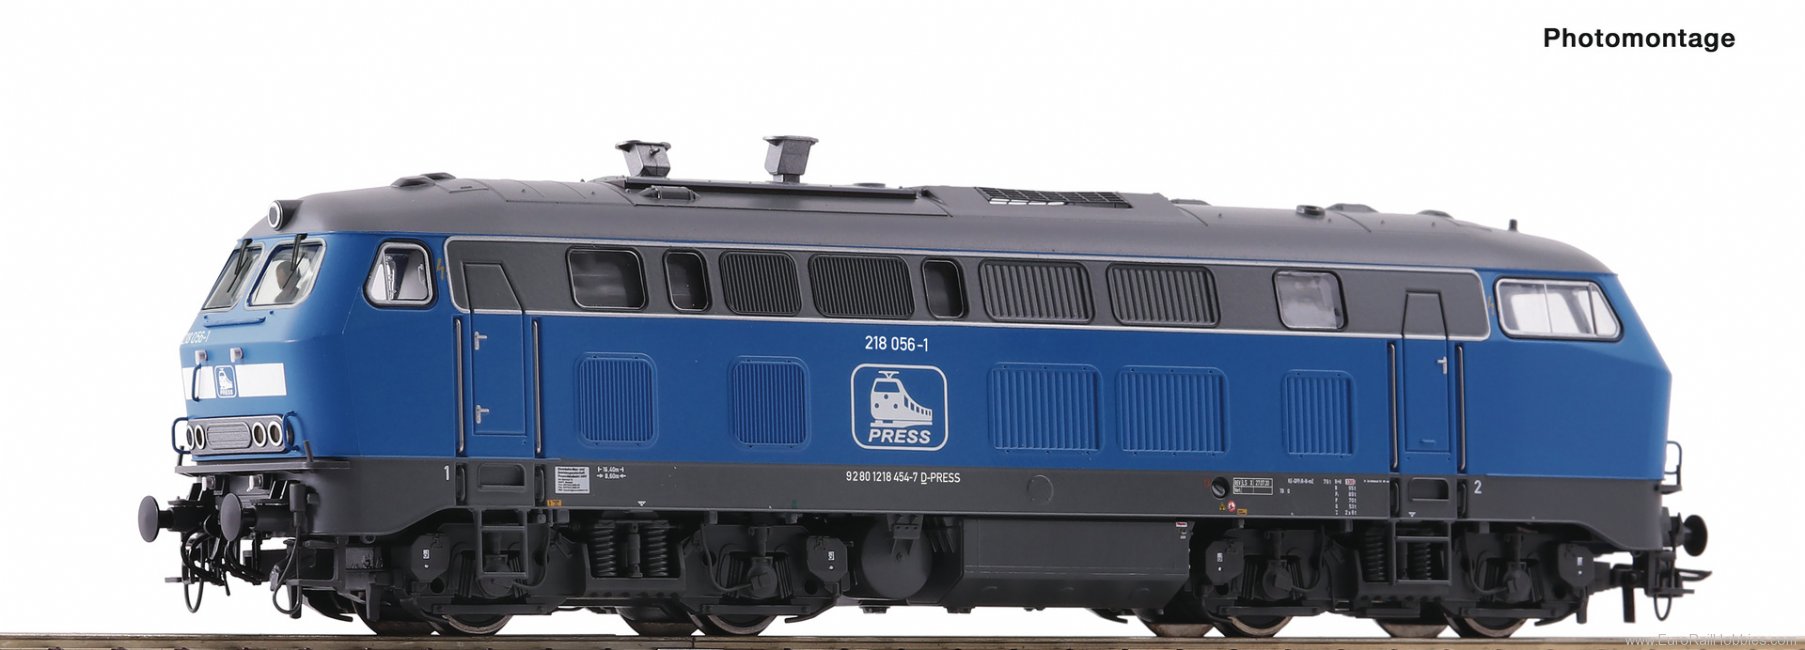 Roco 7310025 Diesel locomotive 218 056-1, PRESS (Digital S